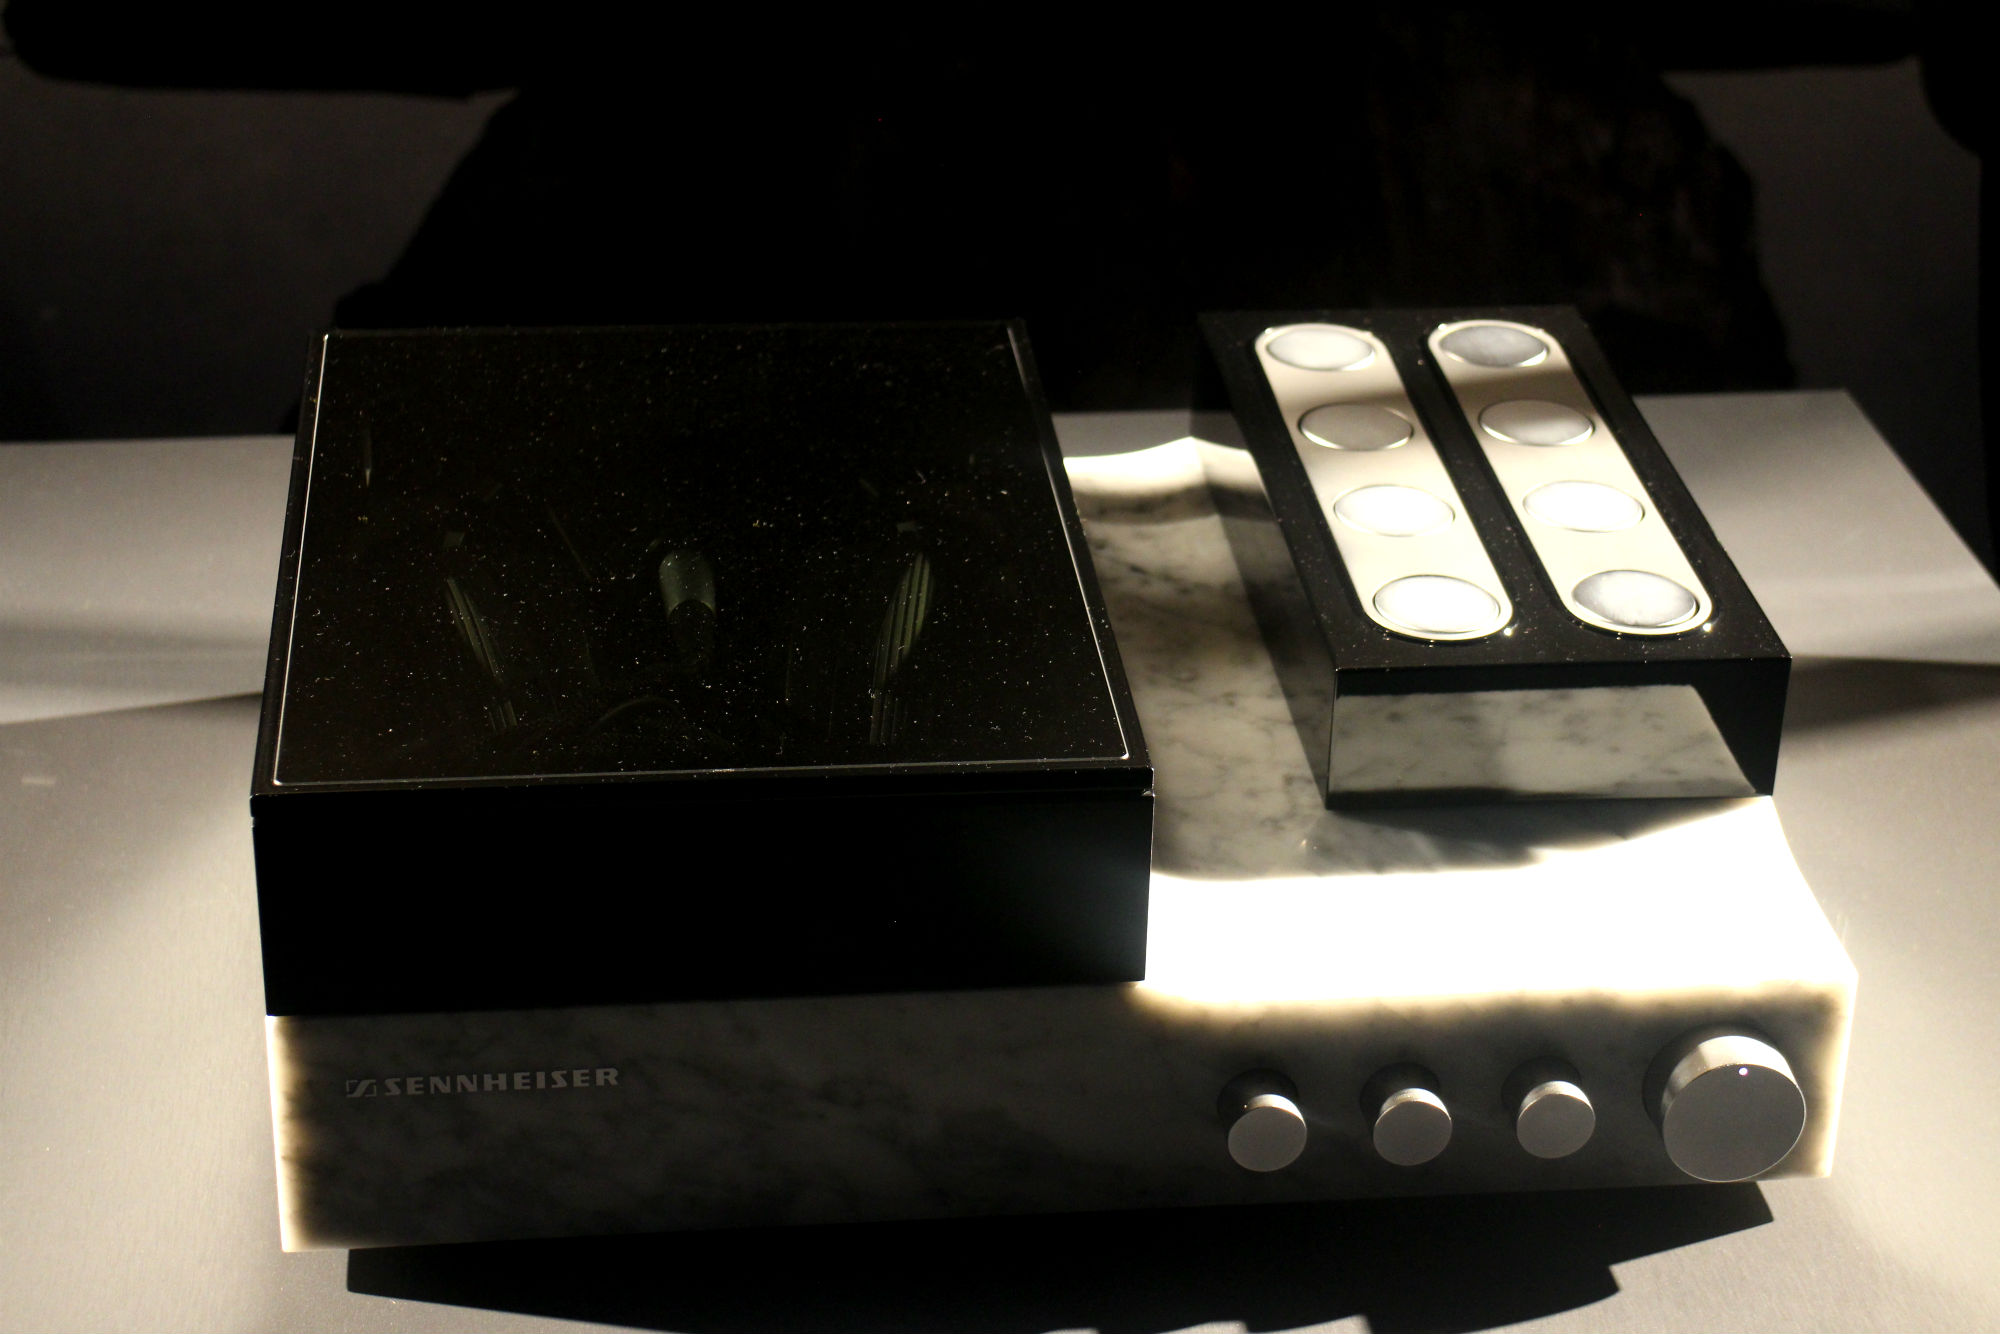 sennheiser new audiophile headphones carrara marble wifi london mystery cans and amp with  3